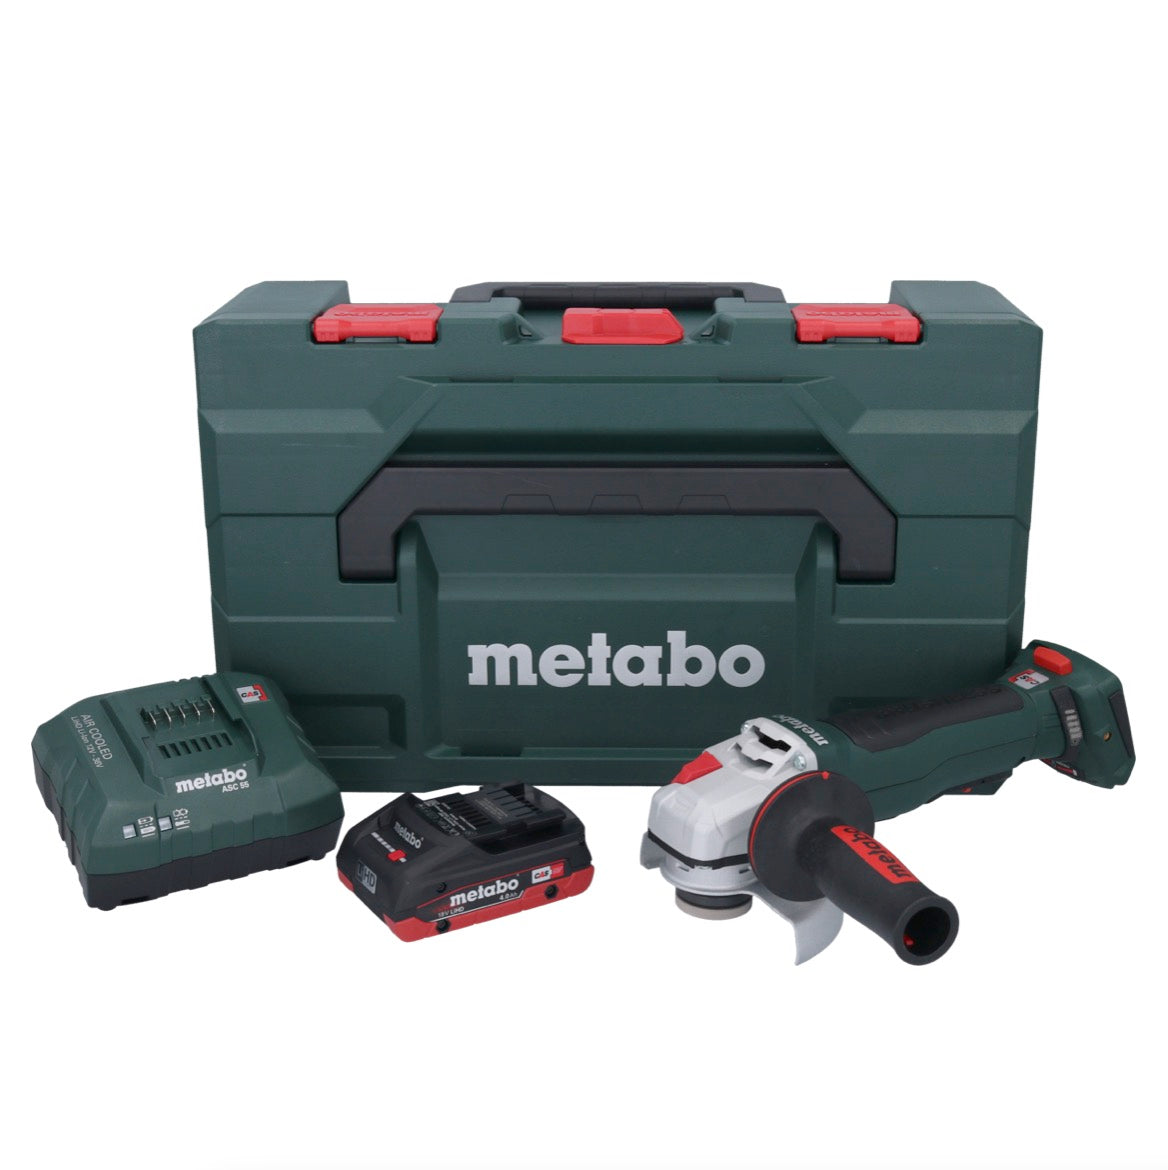 Metabo WPB 18 LT BL 11-125 Quick Akku Winkelschleifer 18 V 125 mm Brushless + 1x Akku 4,0 Ah + Ladegerät + metaBOX - Toolbrothers